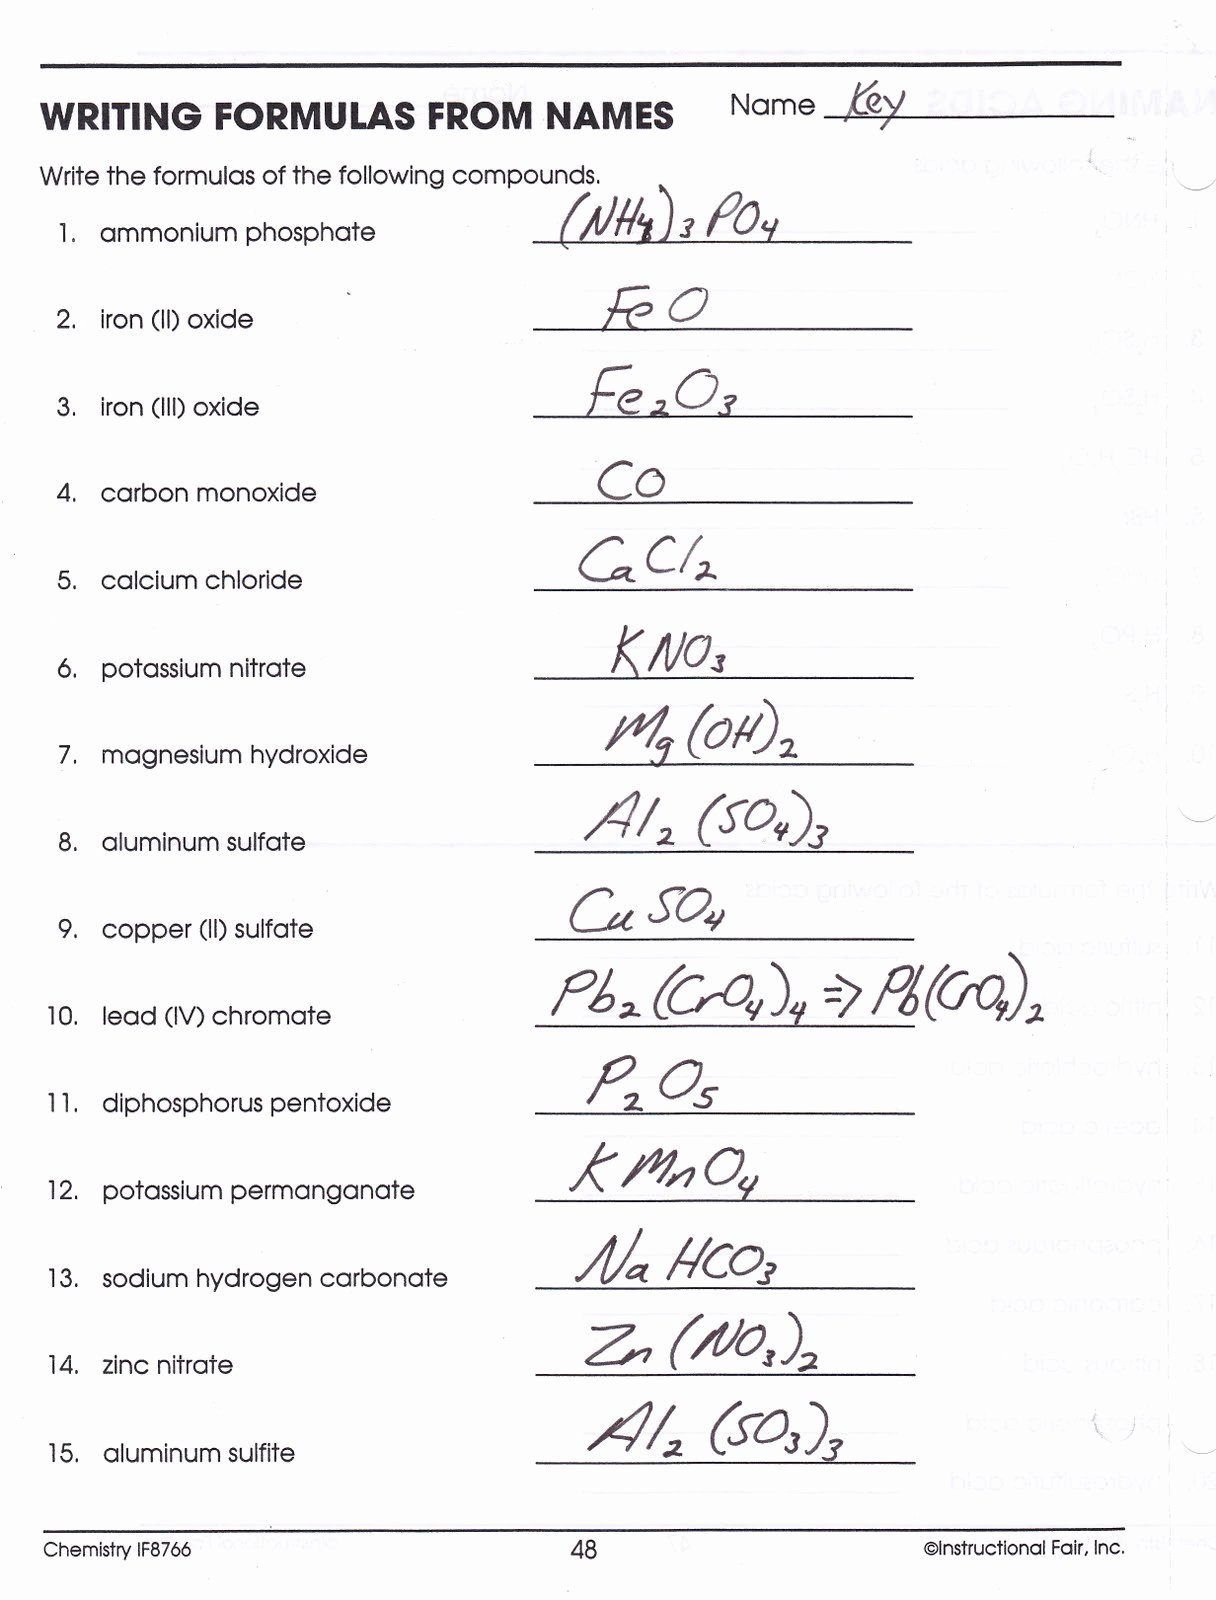 Writing Ionic formulas Worksheet Awesome Heritage High School Chemistry 2010 11 Writing Pound